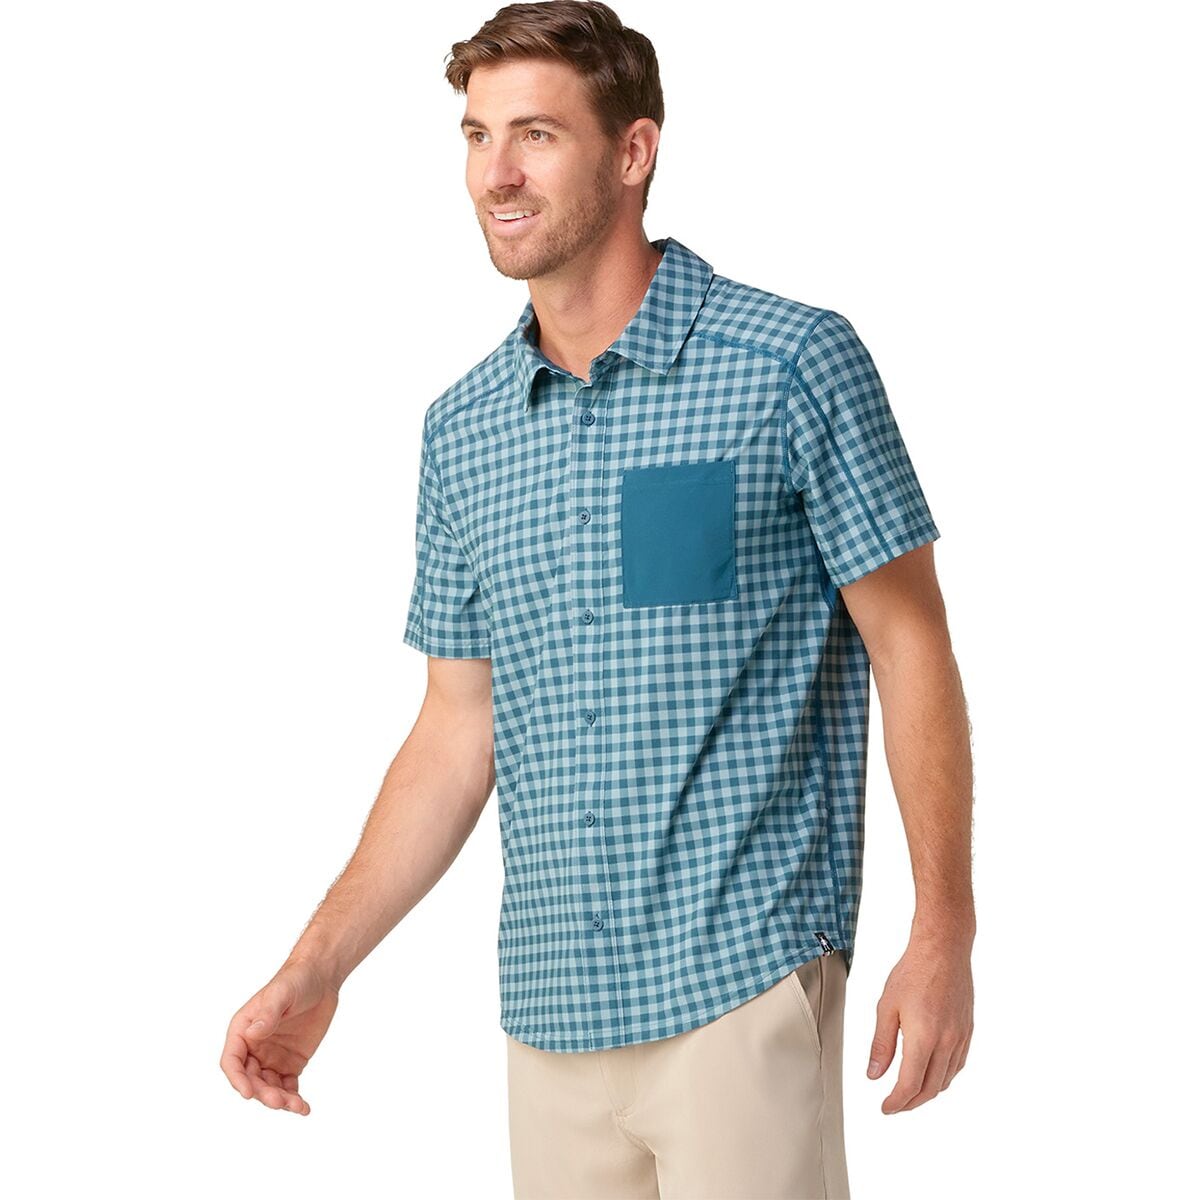 Smartwool Printed Short-Sleeve Button Down Shirt - Men's